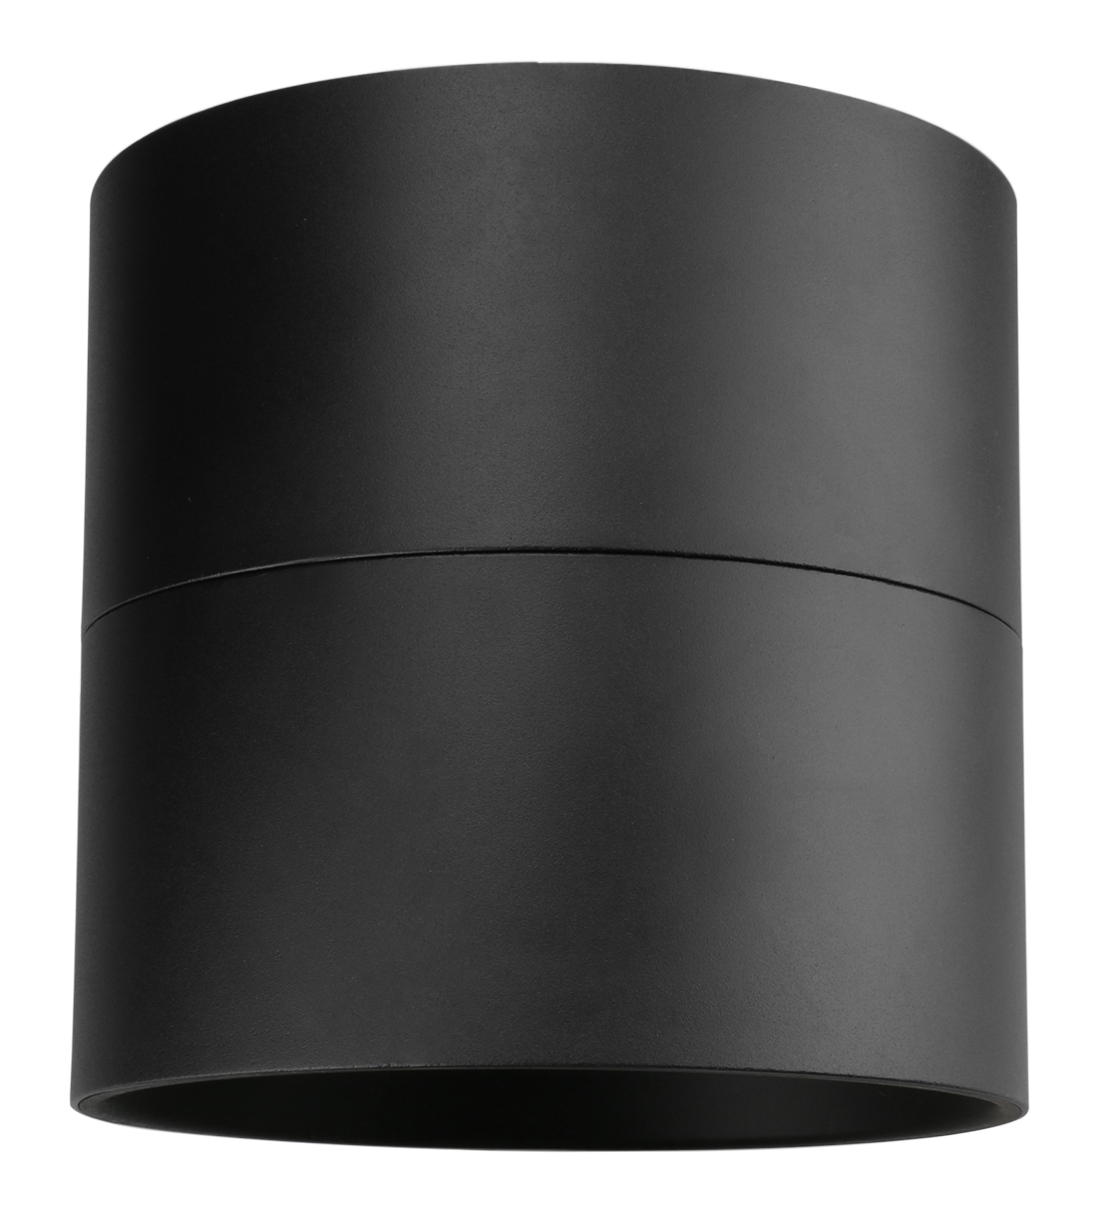 Cylinder Pendant Light Fixture, 8 Inch, Black